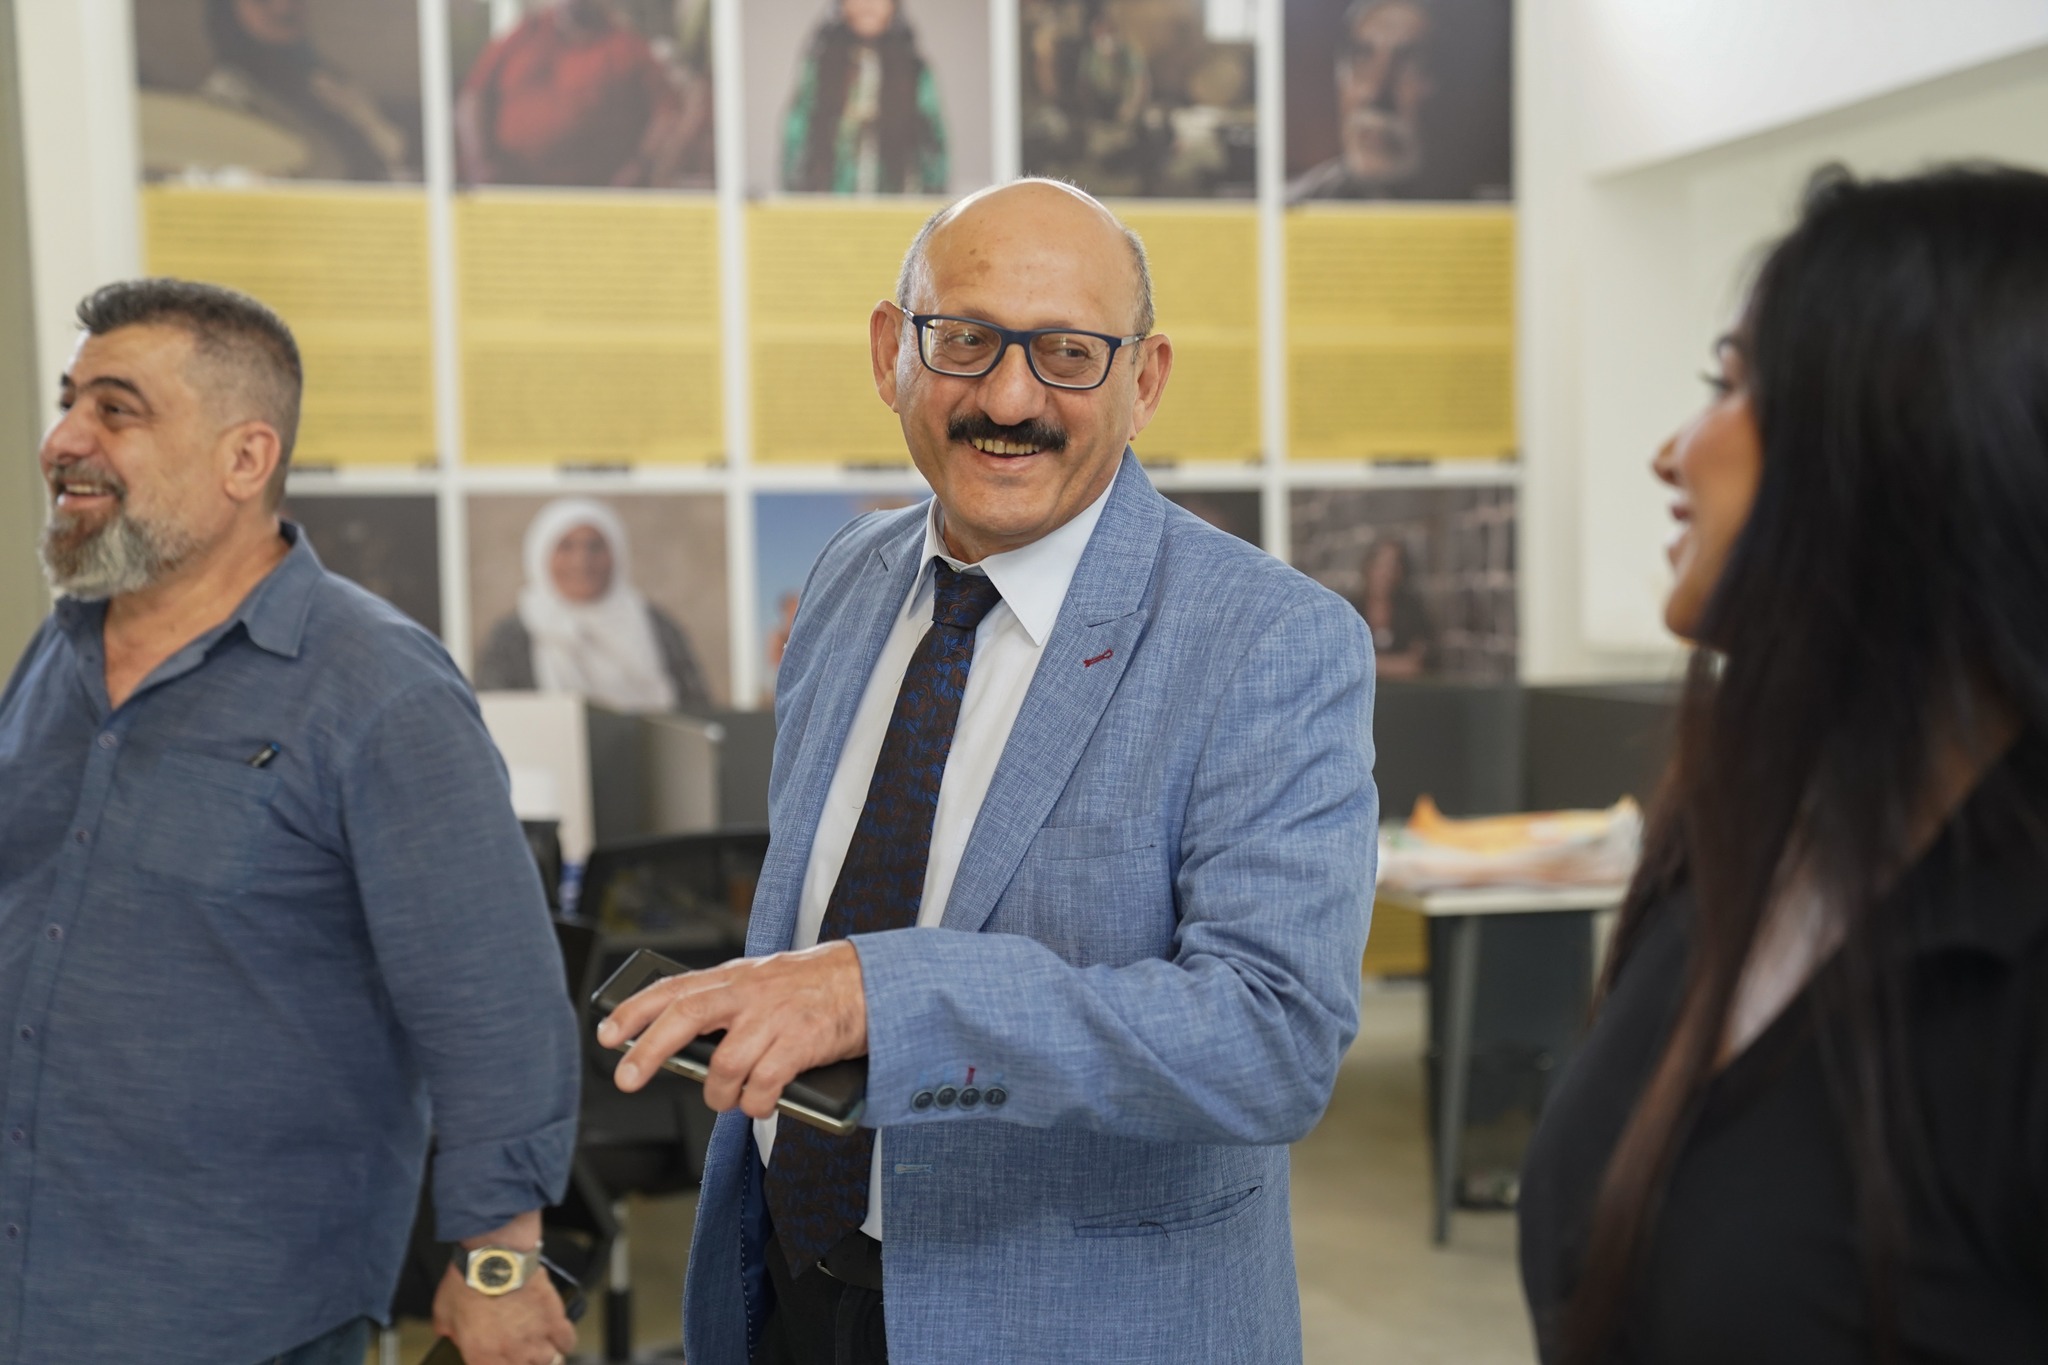 The artist Mr. Nassir Al-Rubaye, the Iraqi media personality and Paleett Foundation Director, visited VimFoundation.